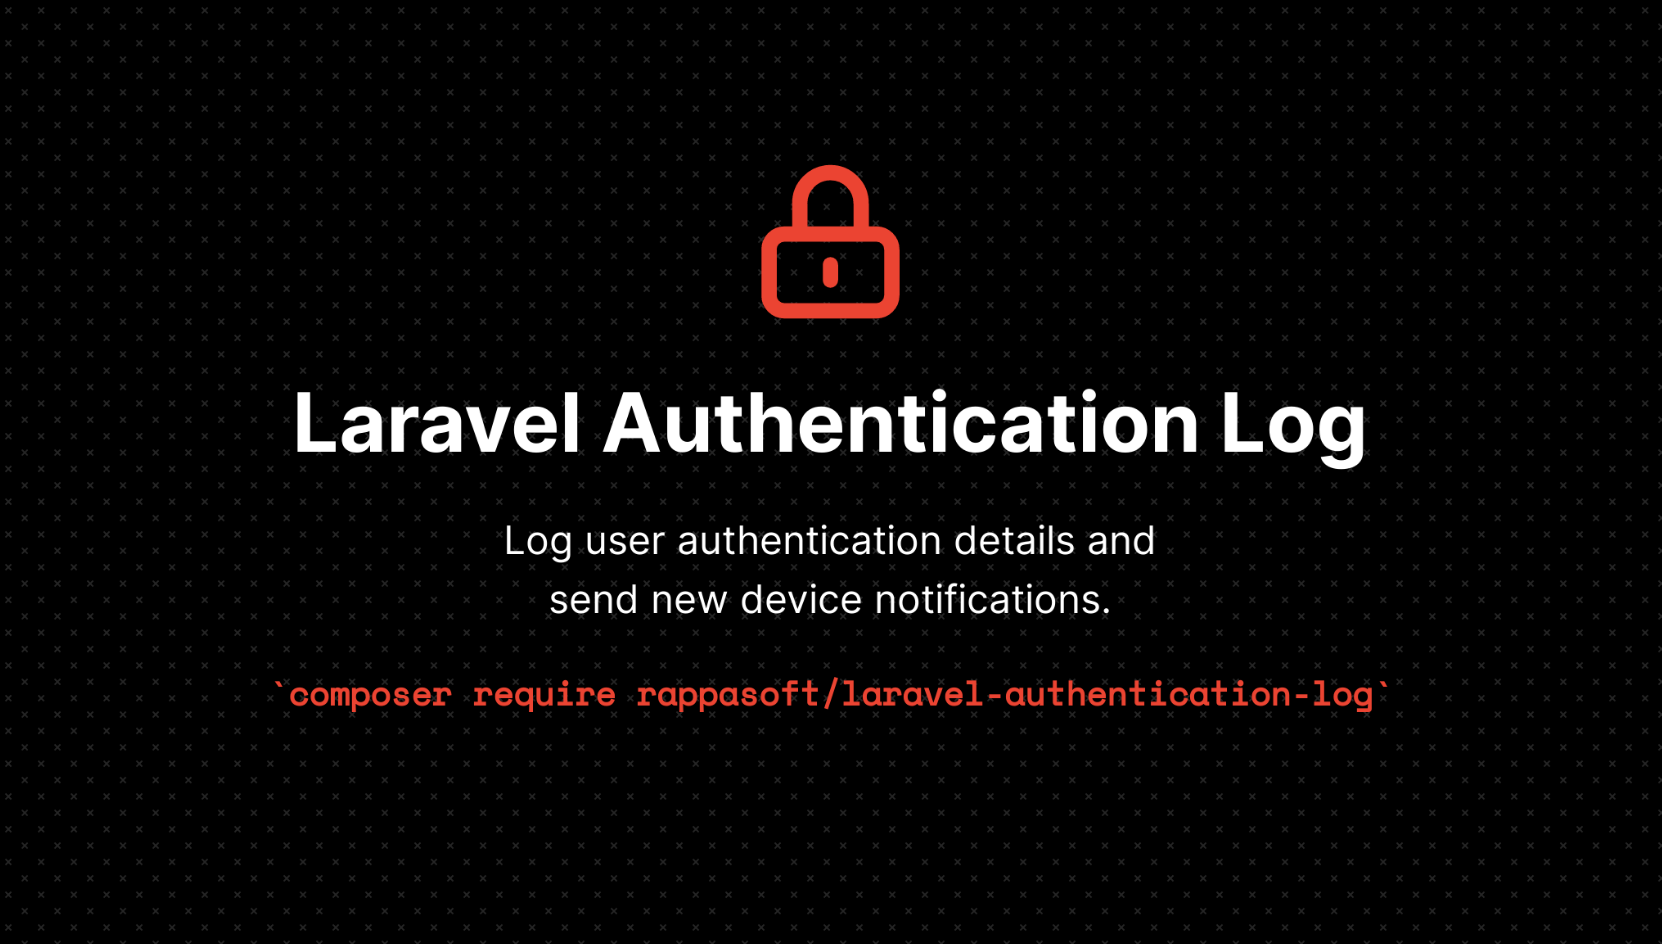 Introducing Laravel Authentication Log - Post Image